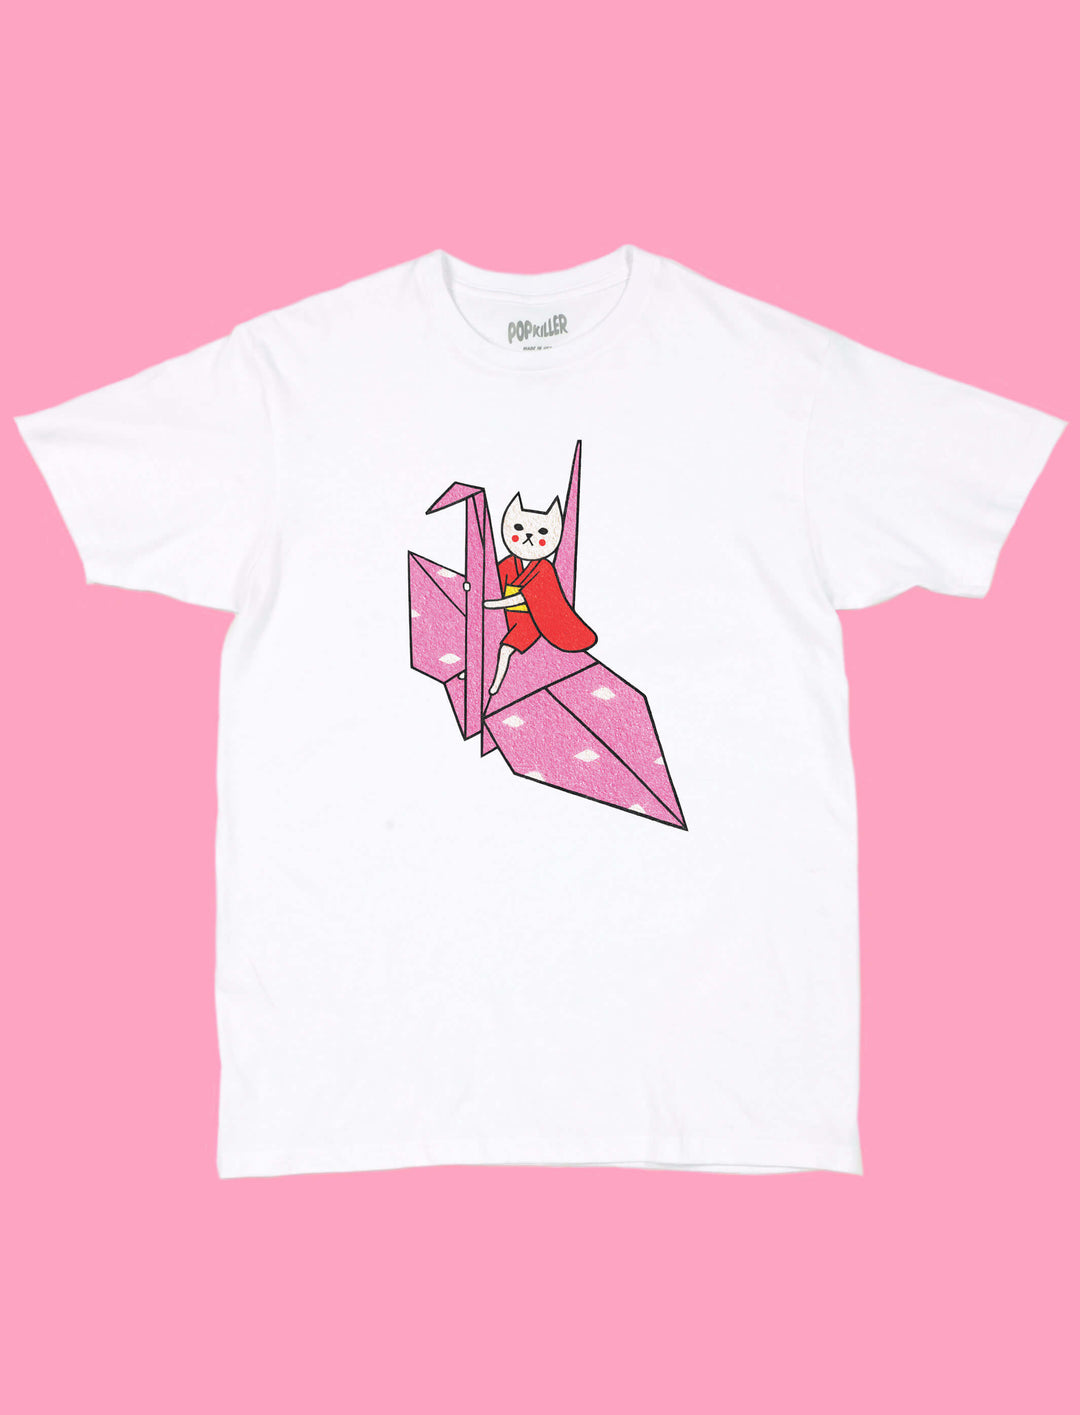 Origami cat graphic t-shirt.